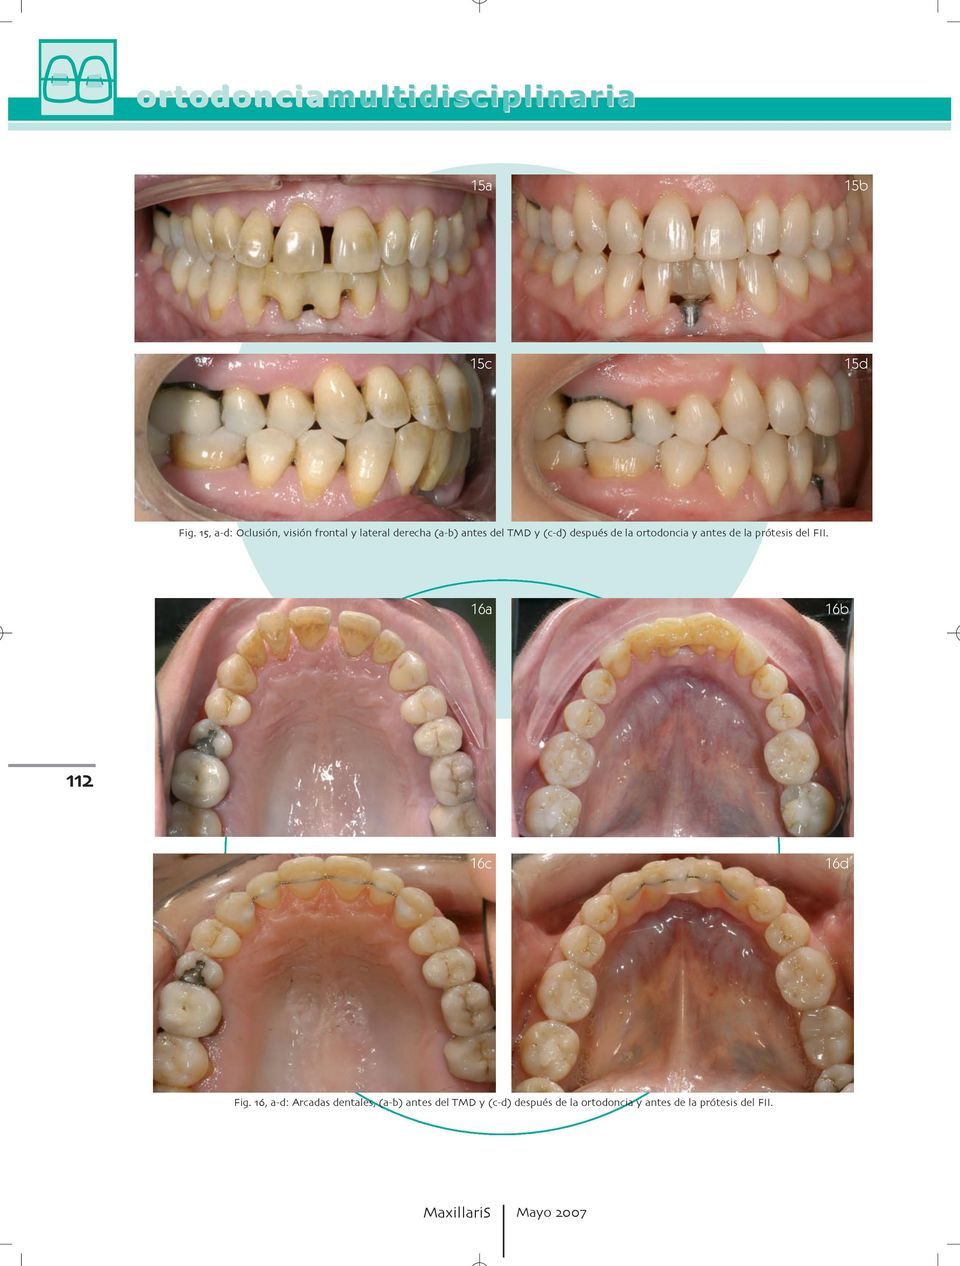 prótesis del FII 16a 16b 16c 16d Fig a d: Arcadas dentales  prótesis